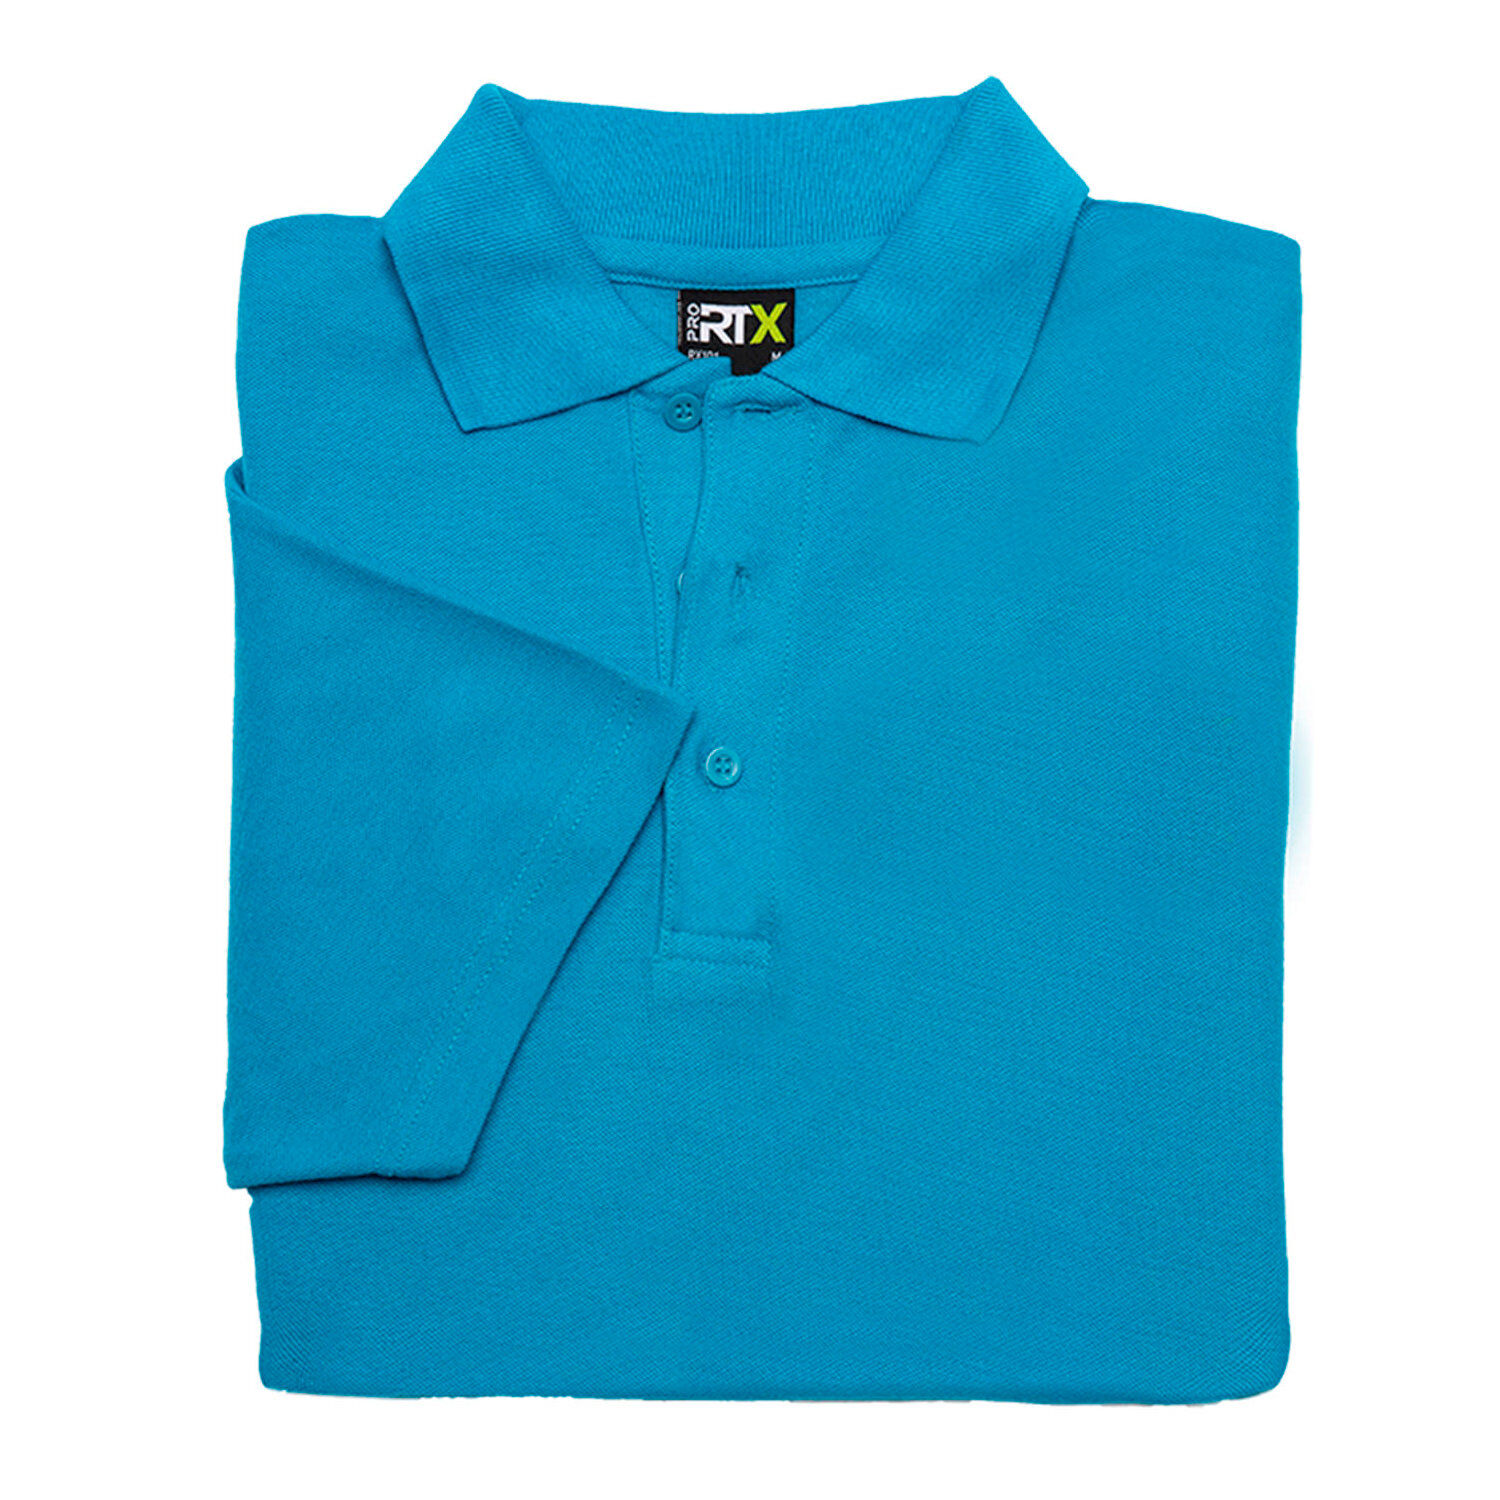 Pro RTX Workwear Polo Shirt